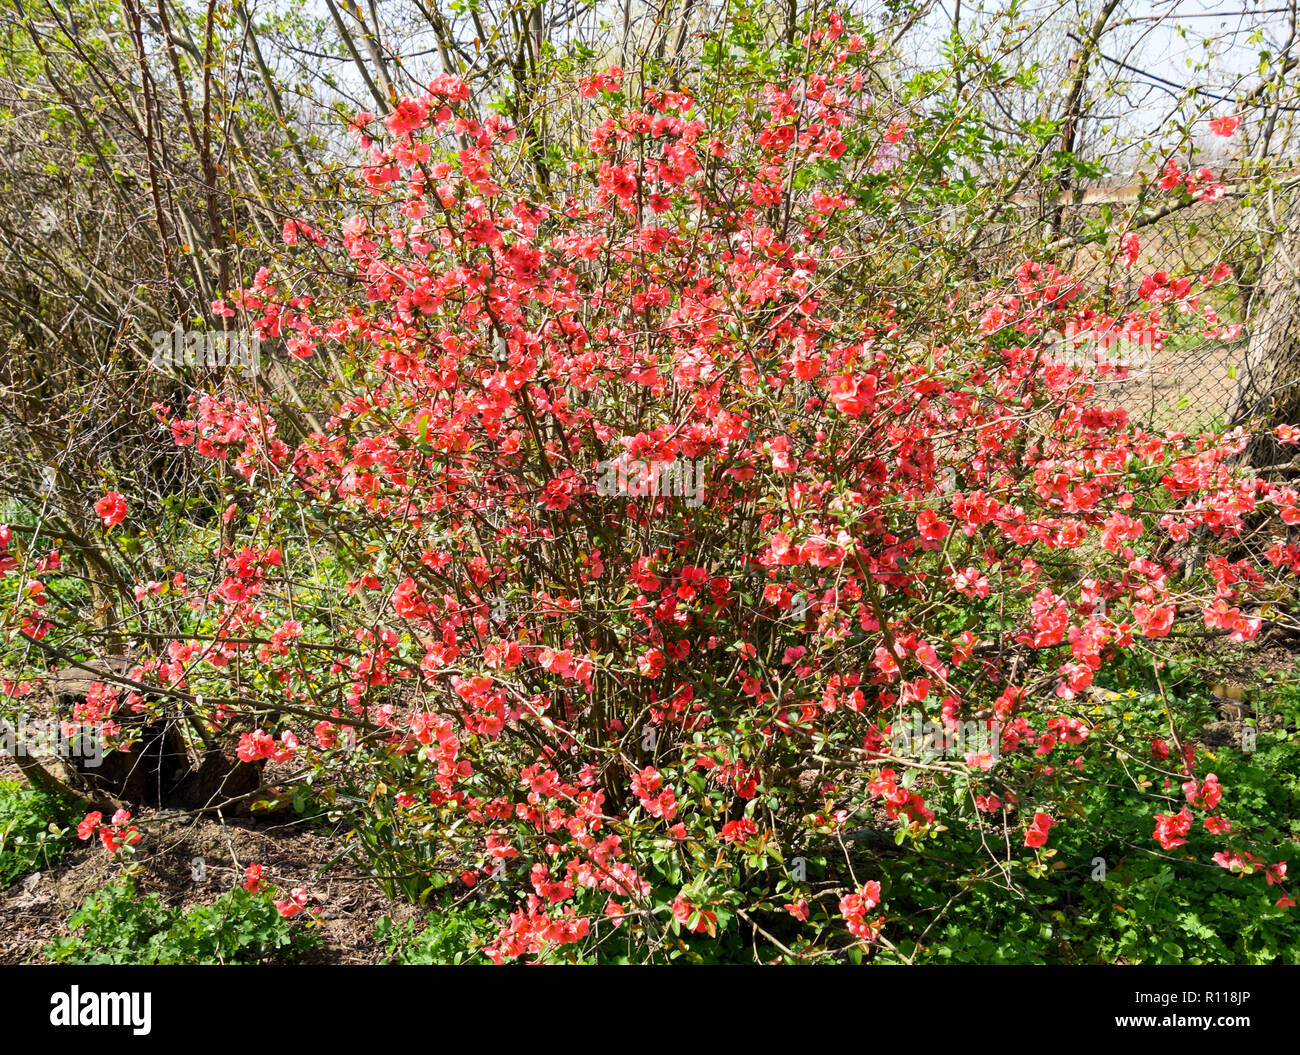 Bush mit rosa Blüten. Frühling blühende Sträucher Stockfotografie - Alamy